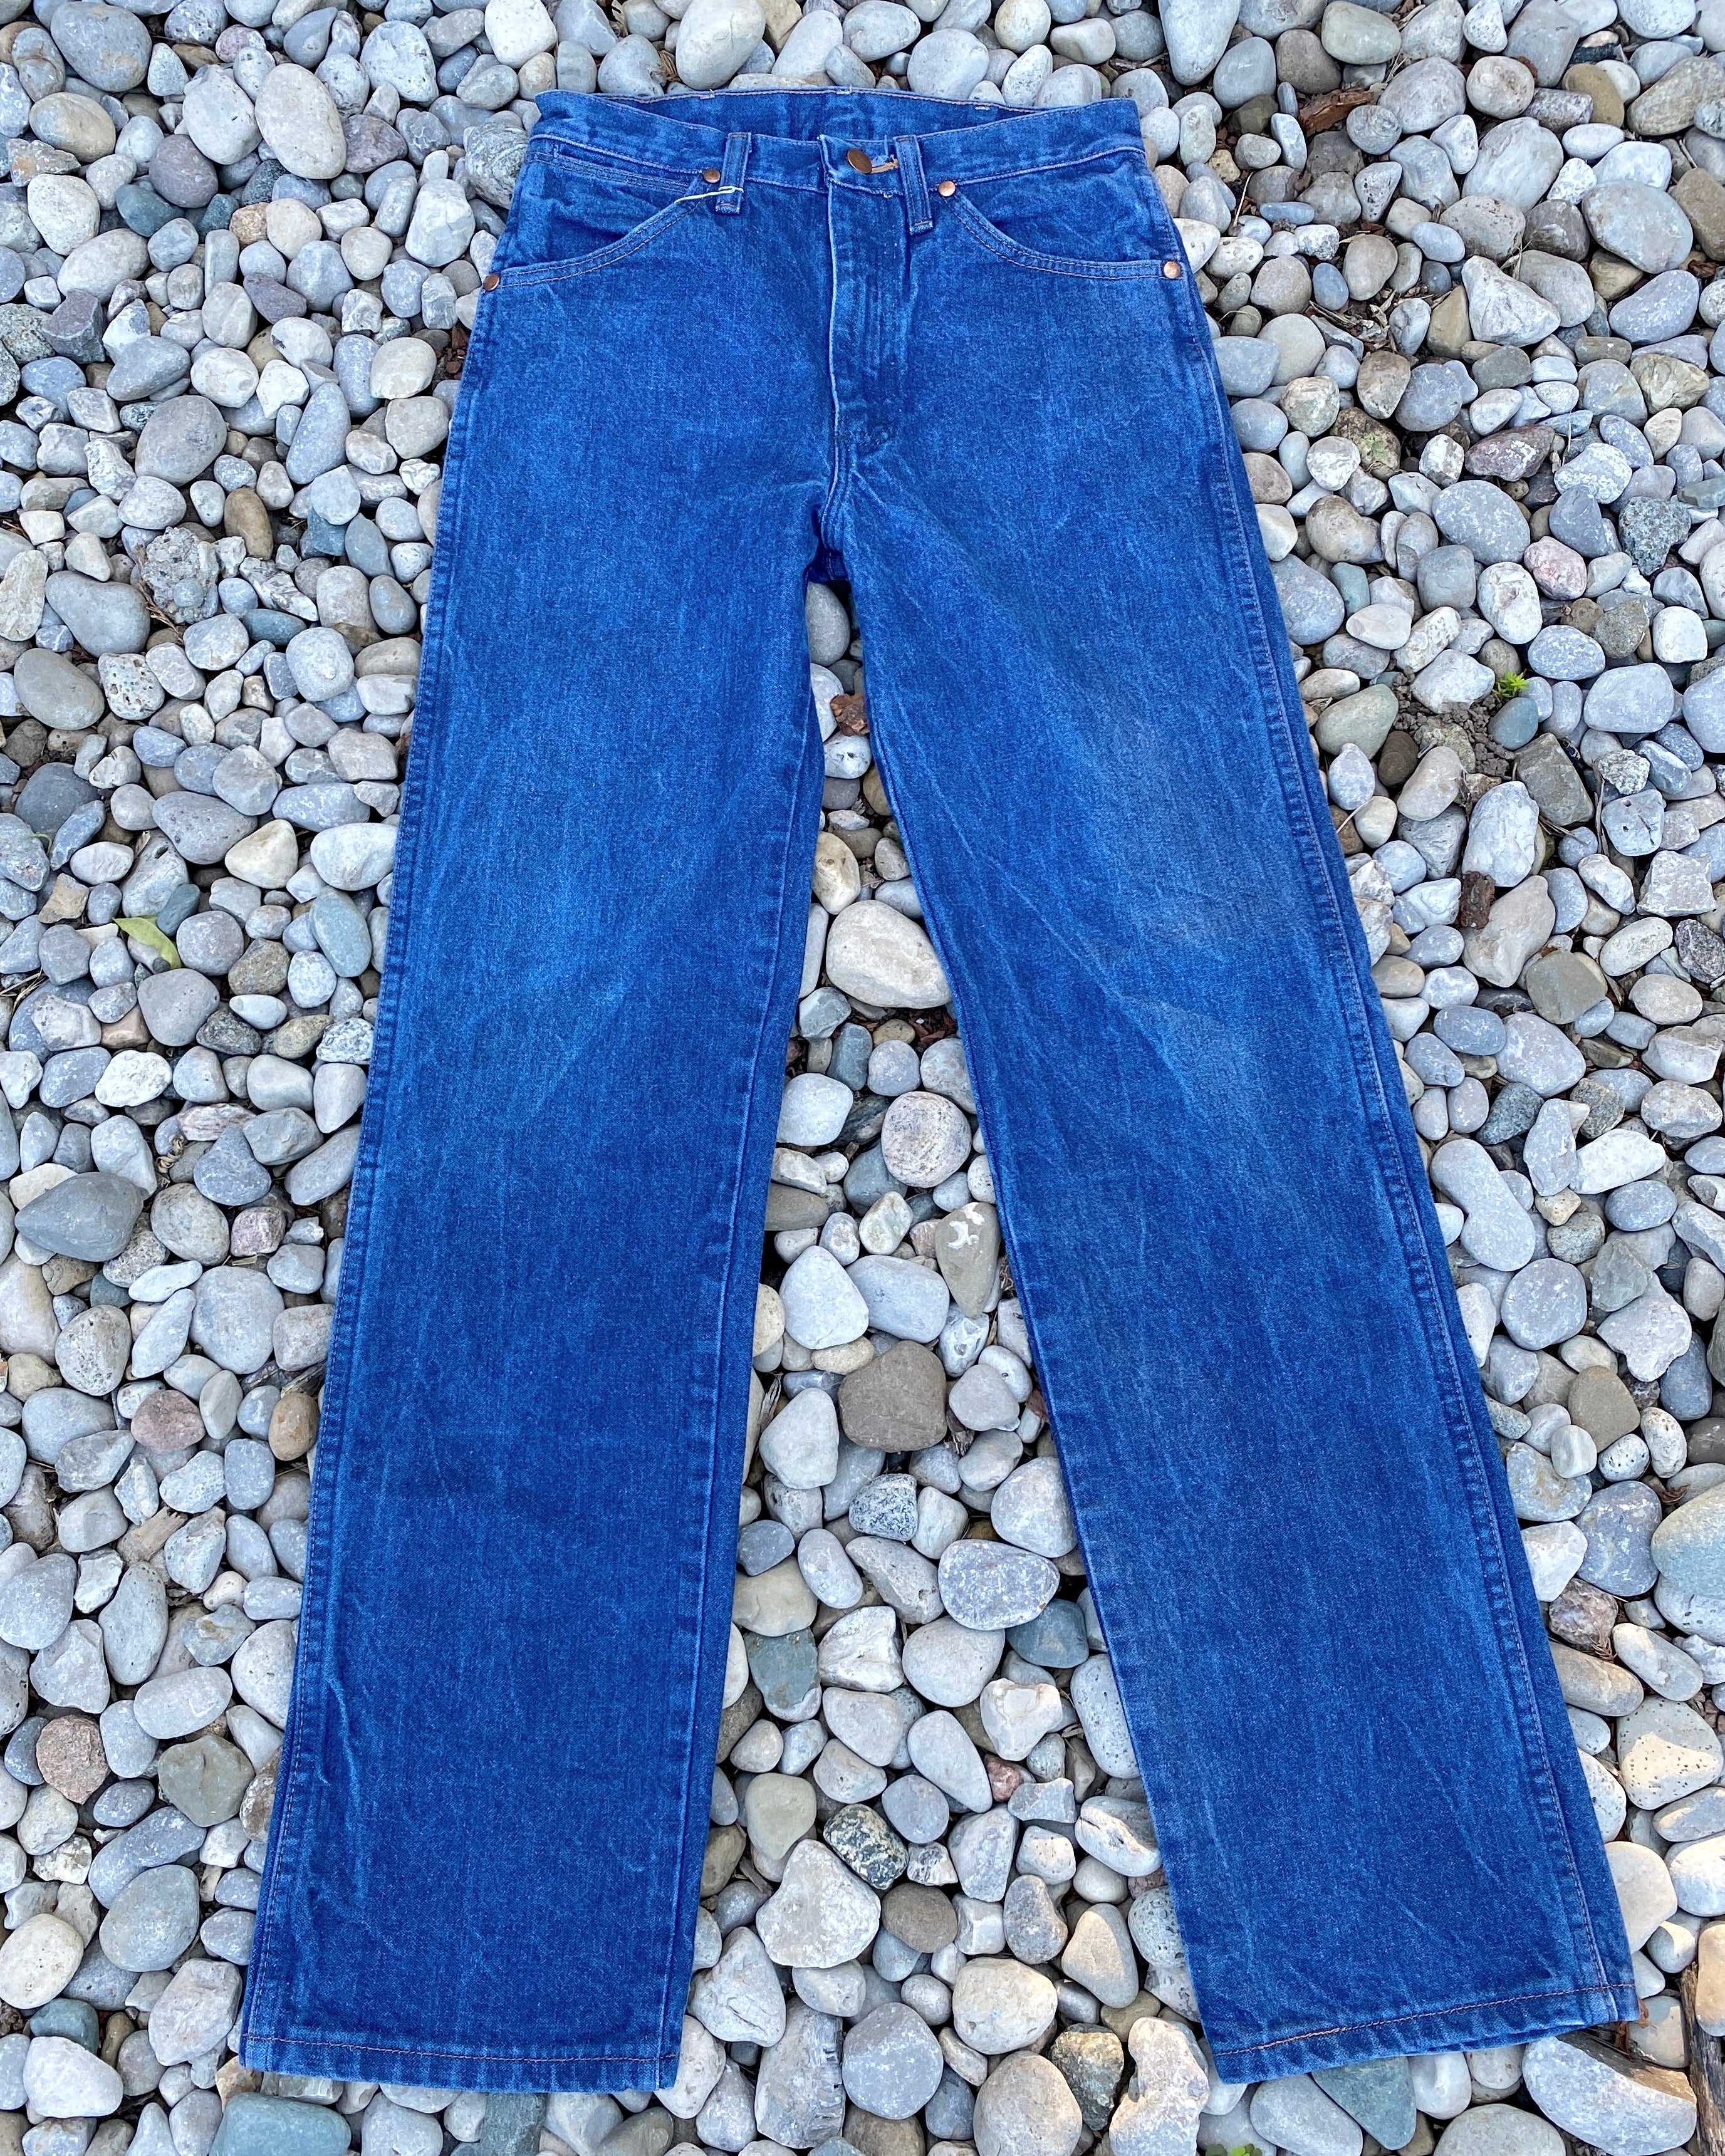 Vintage Wrangler Dark Wash Jeans size 27 to 28